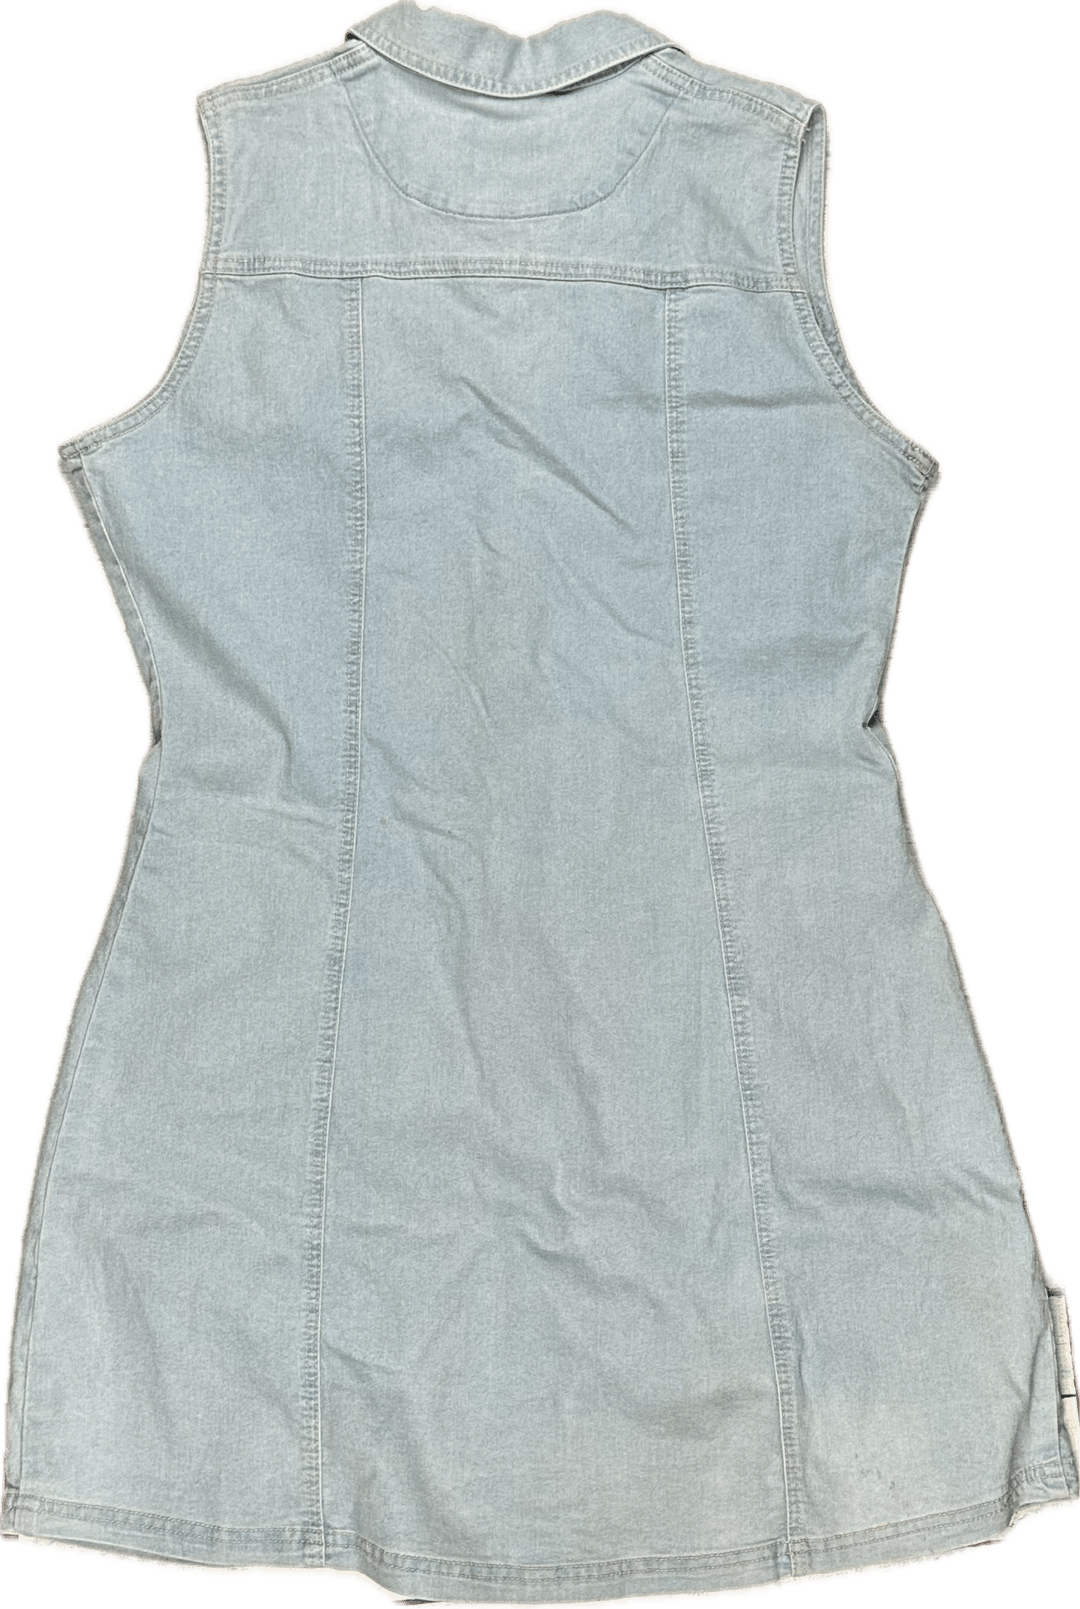 NWT- Firetrap Denim Sleeveless shirt Dress Size - 14 - Jean Pool